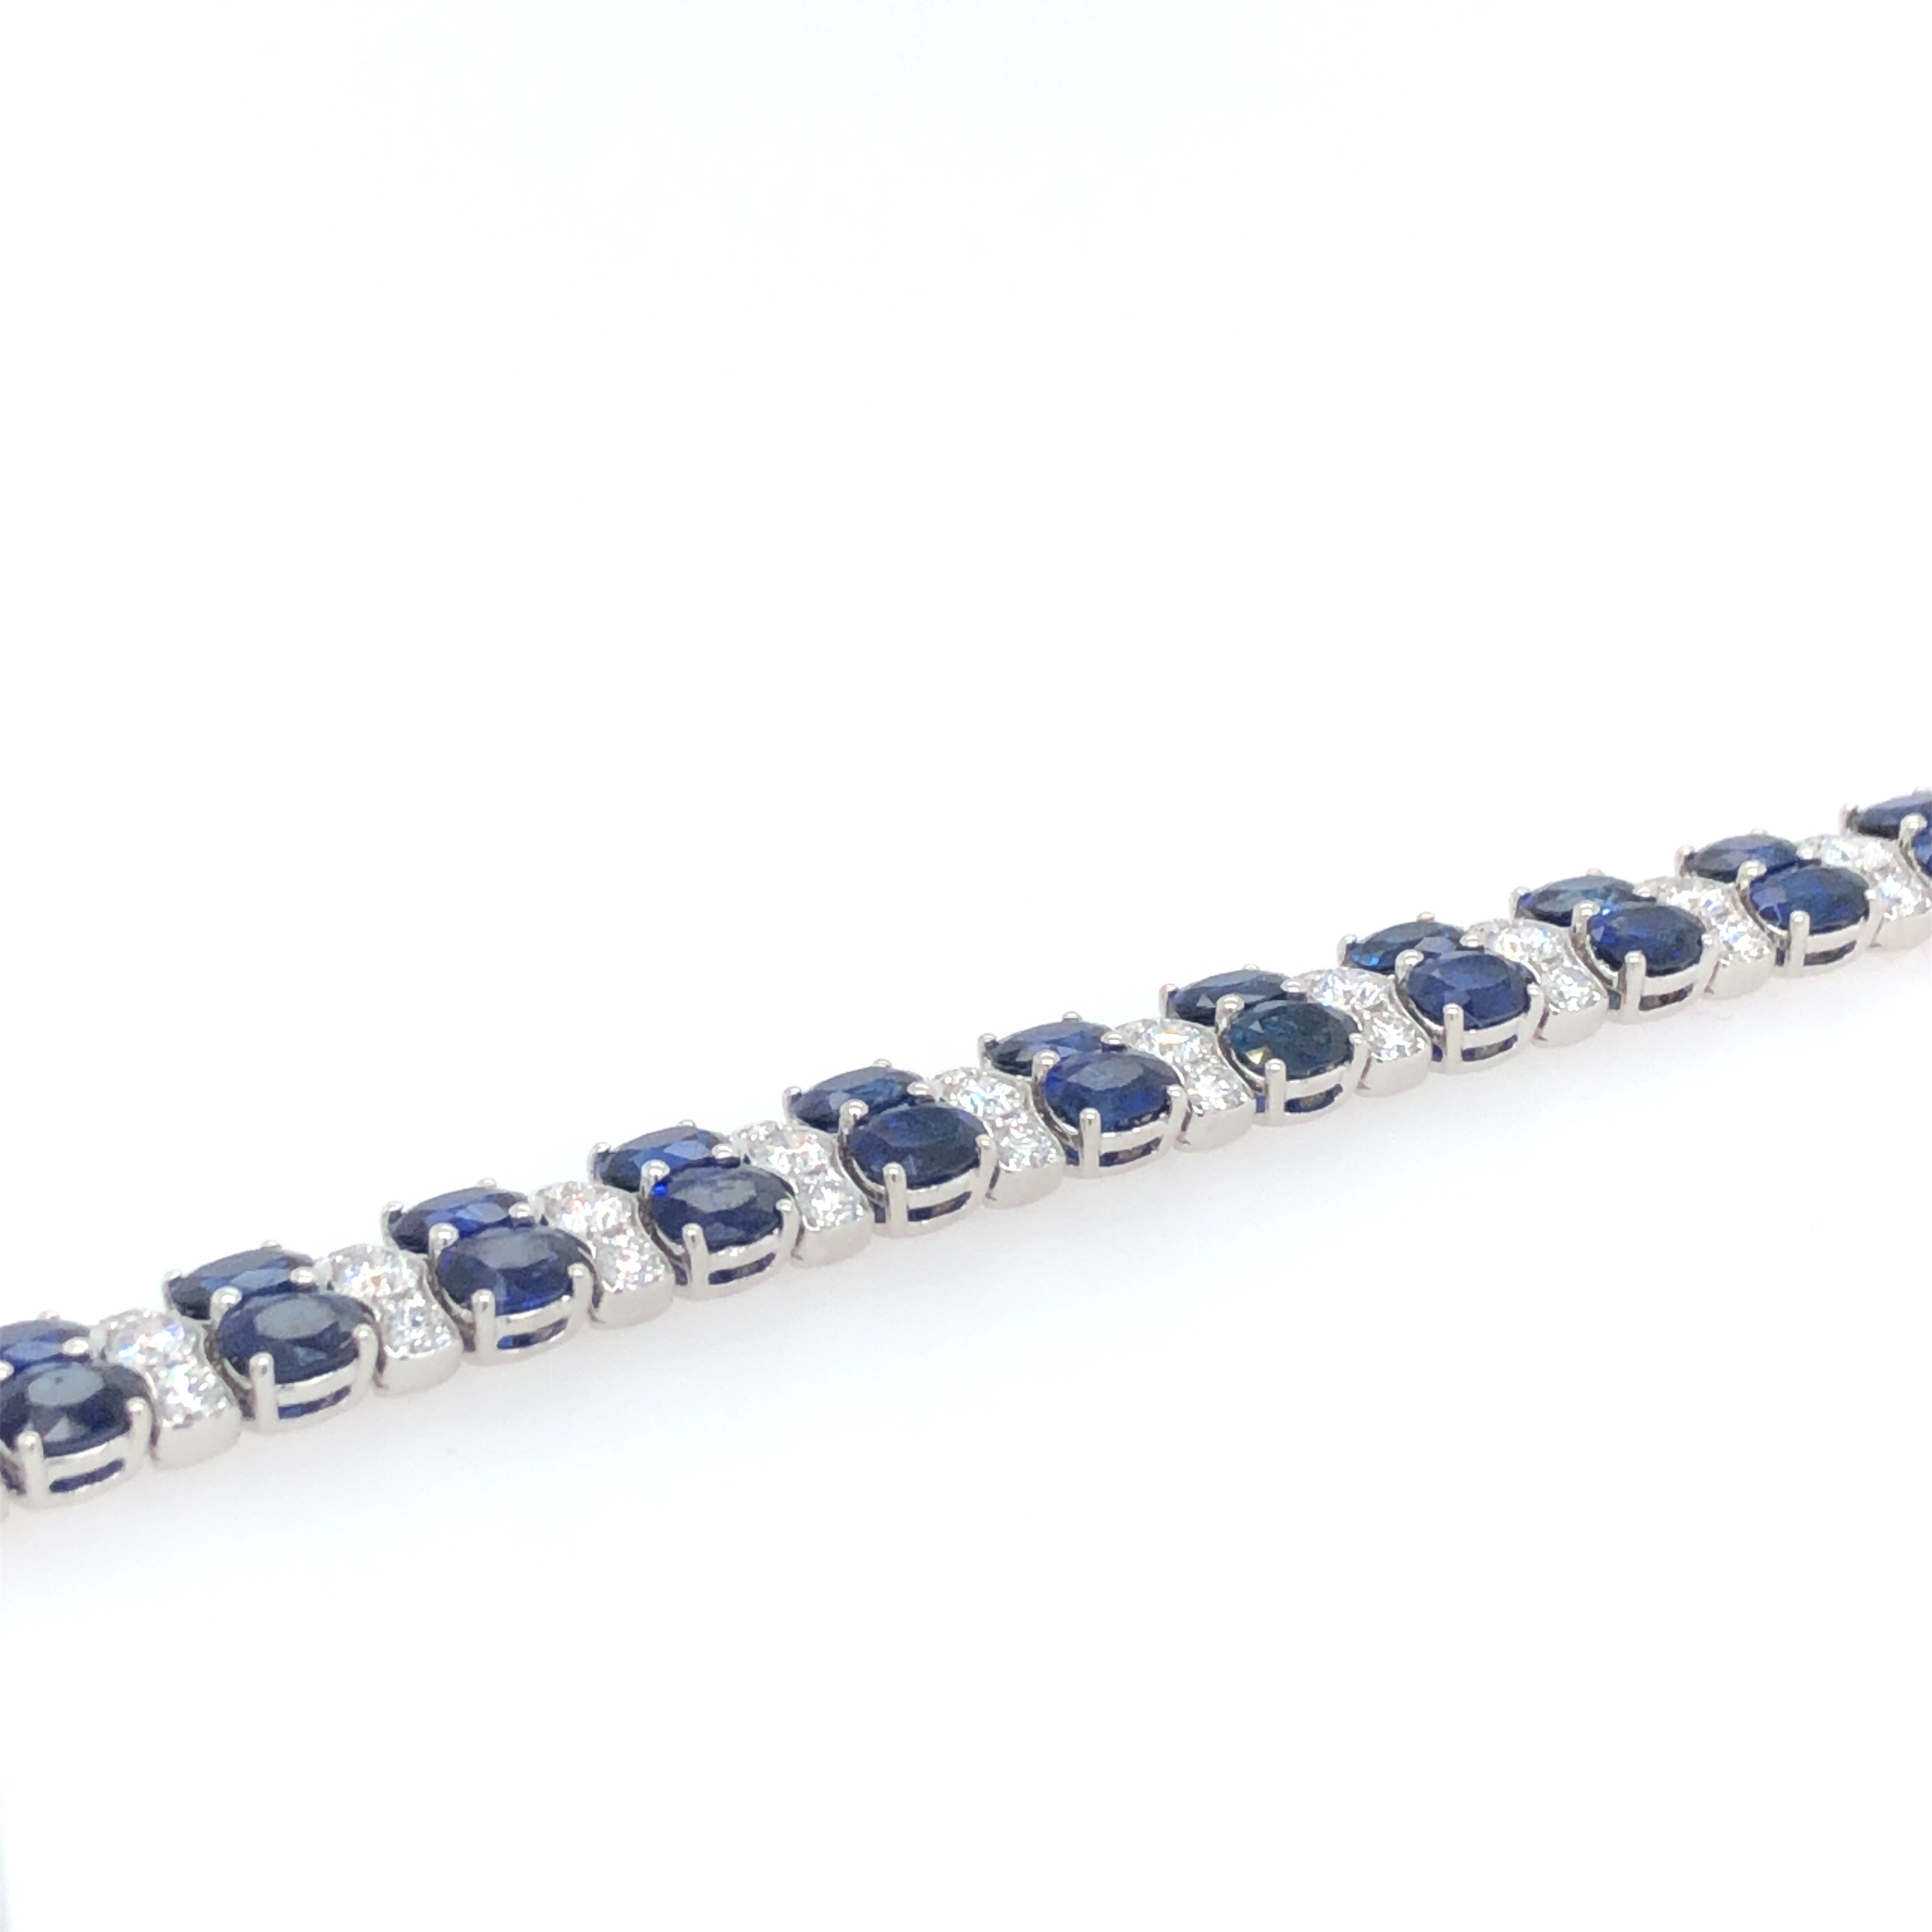 In Line Sapphires Bracelet - Colored Stone Bracelets